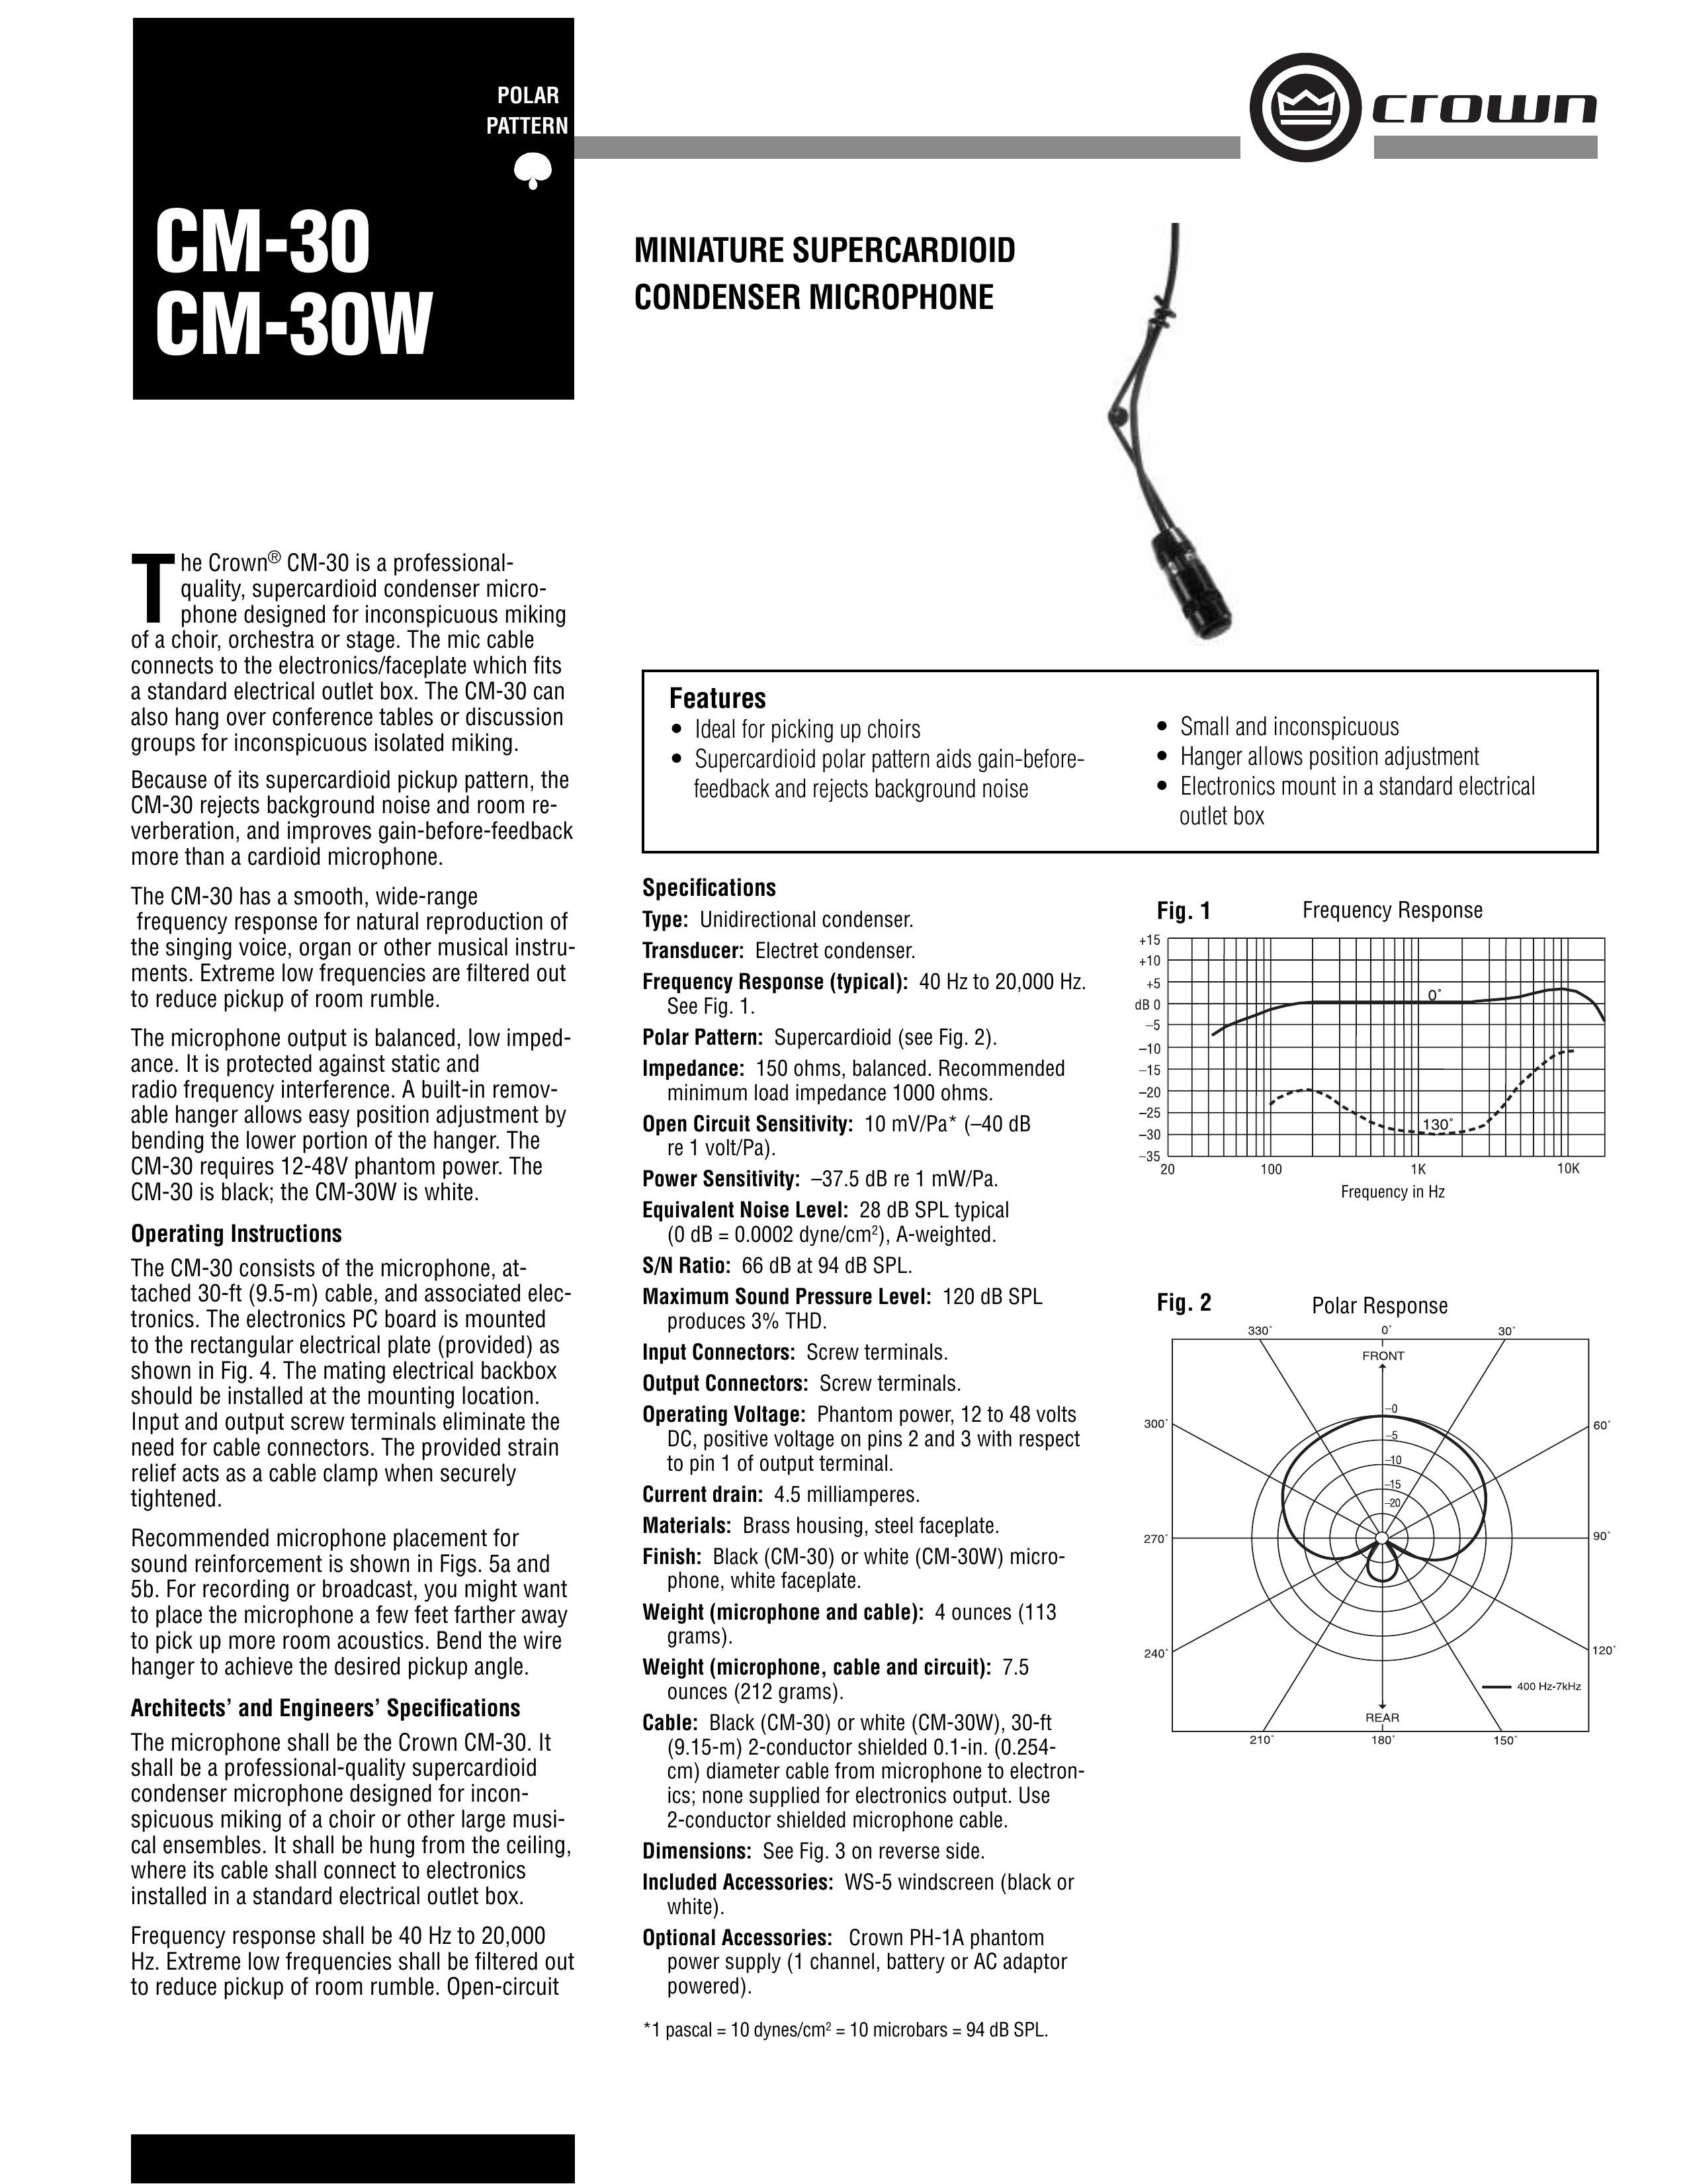 Crown Audio CM-30W Microphone User Manual